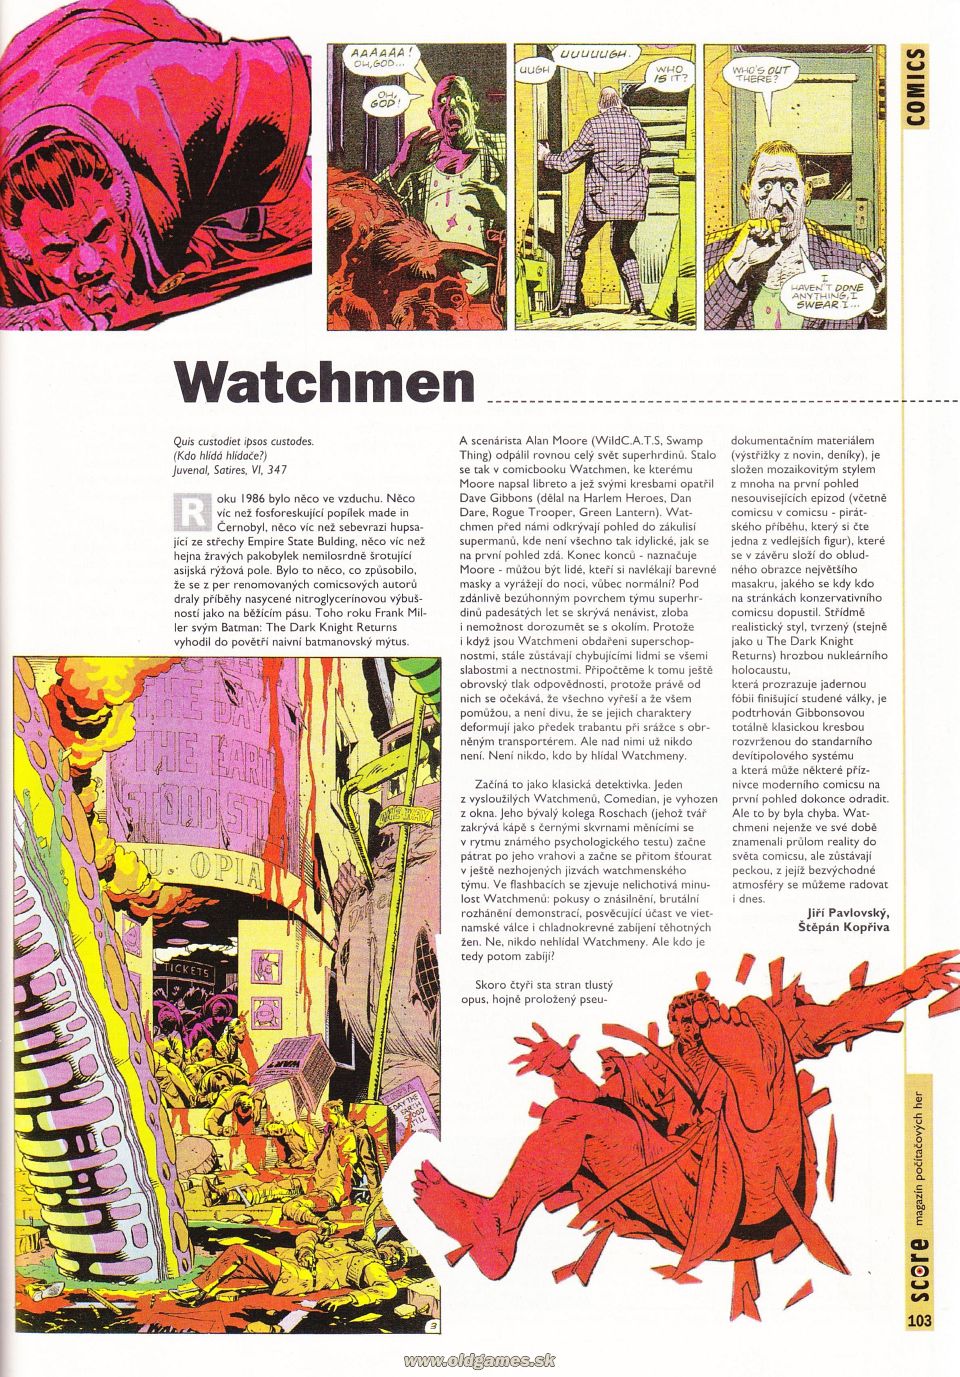 Comics: Watchmen